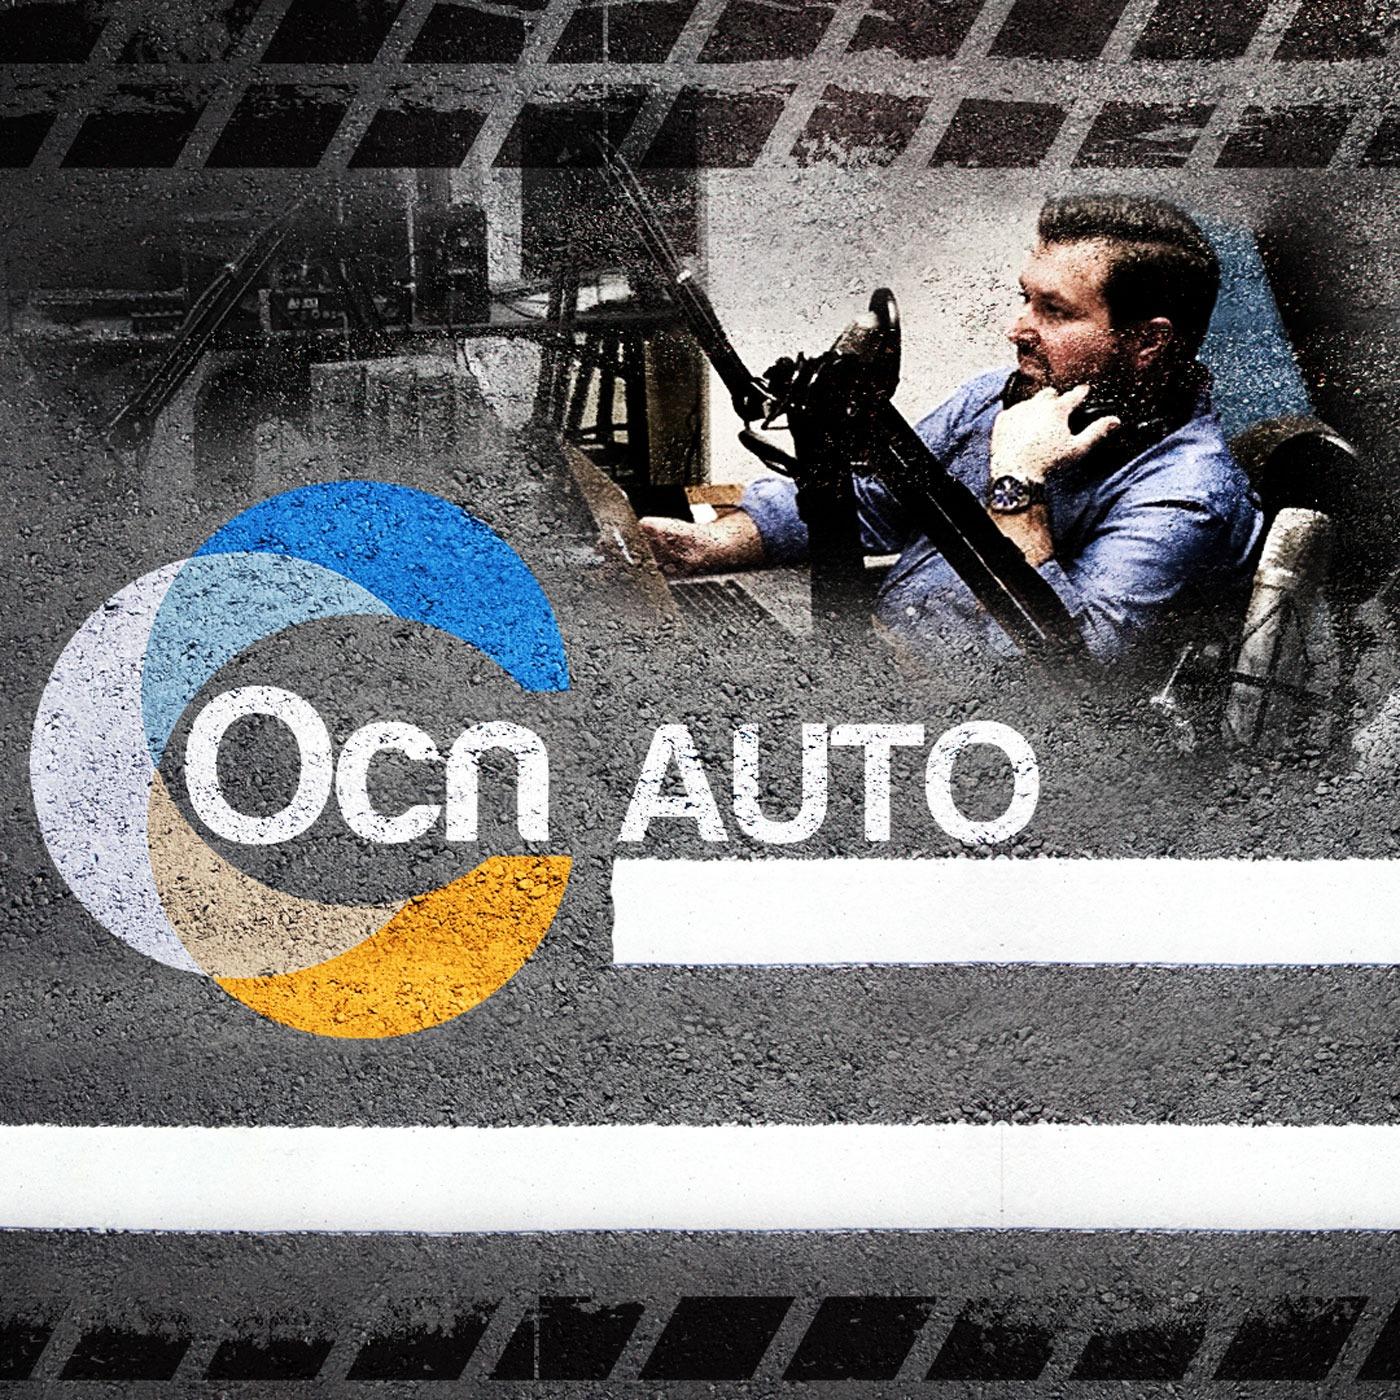 OCN Auto